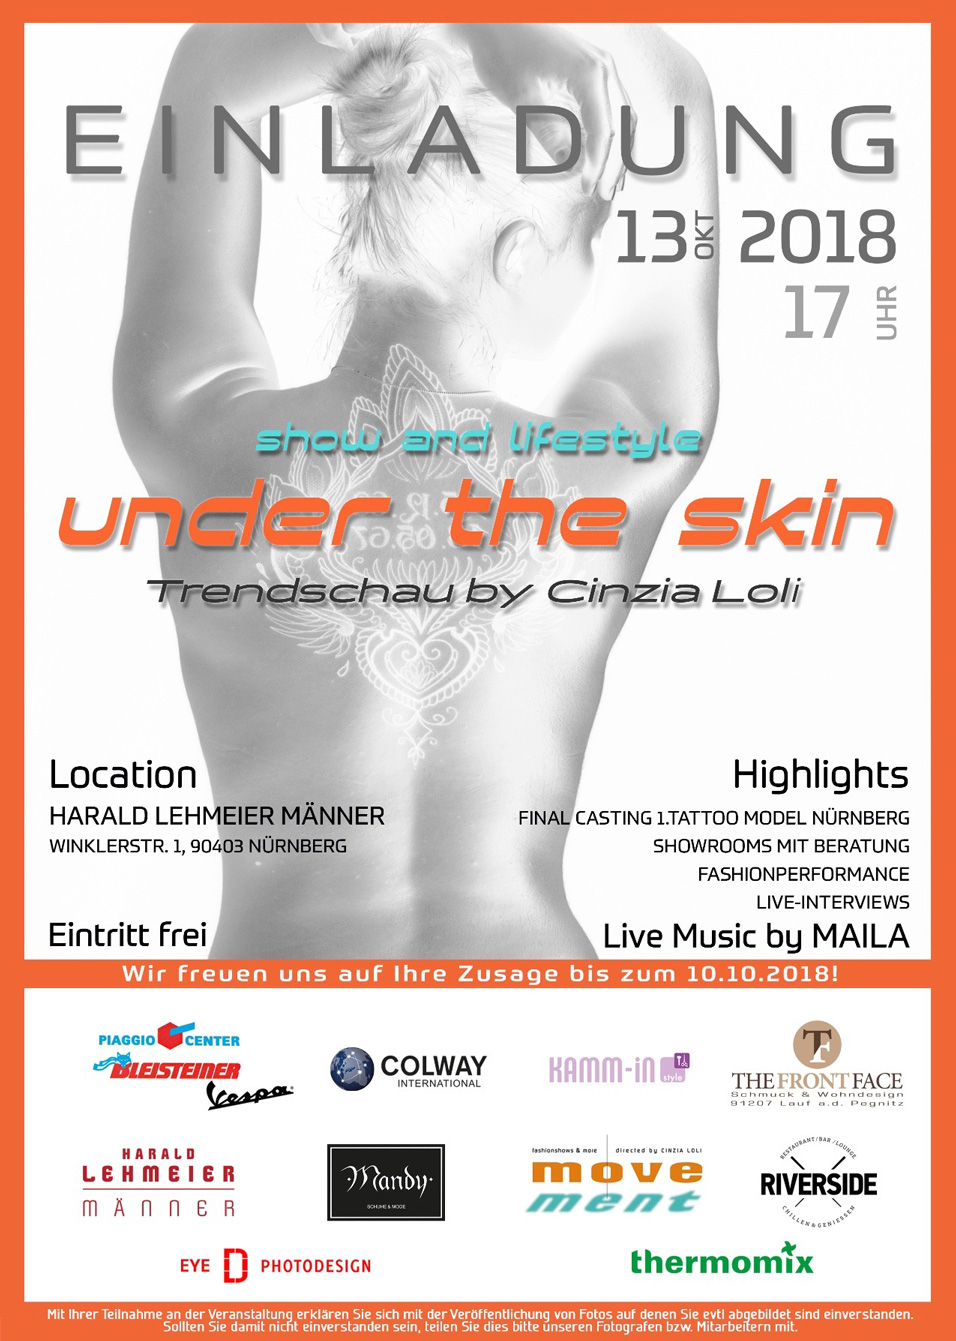 under the skin Trendschau by Cinzia Loli ®